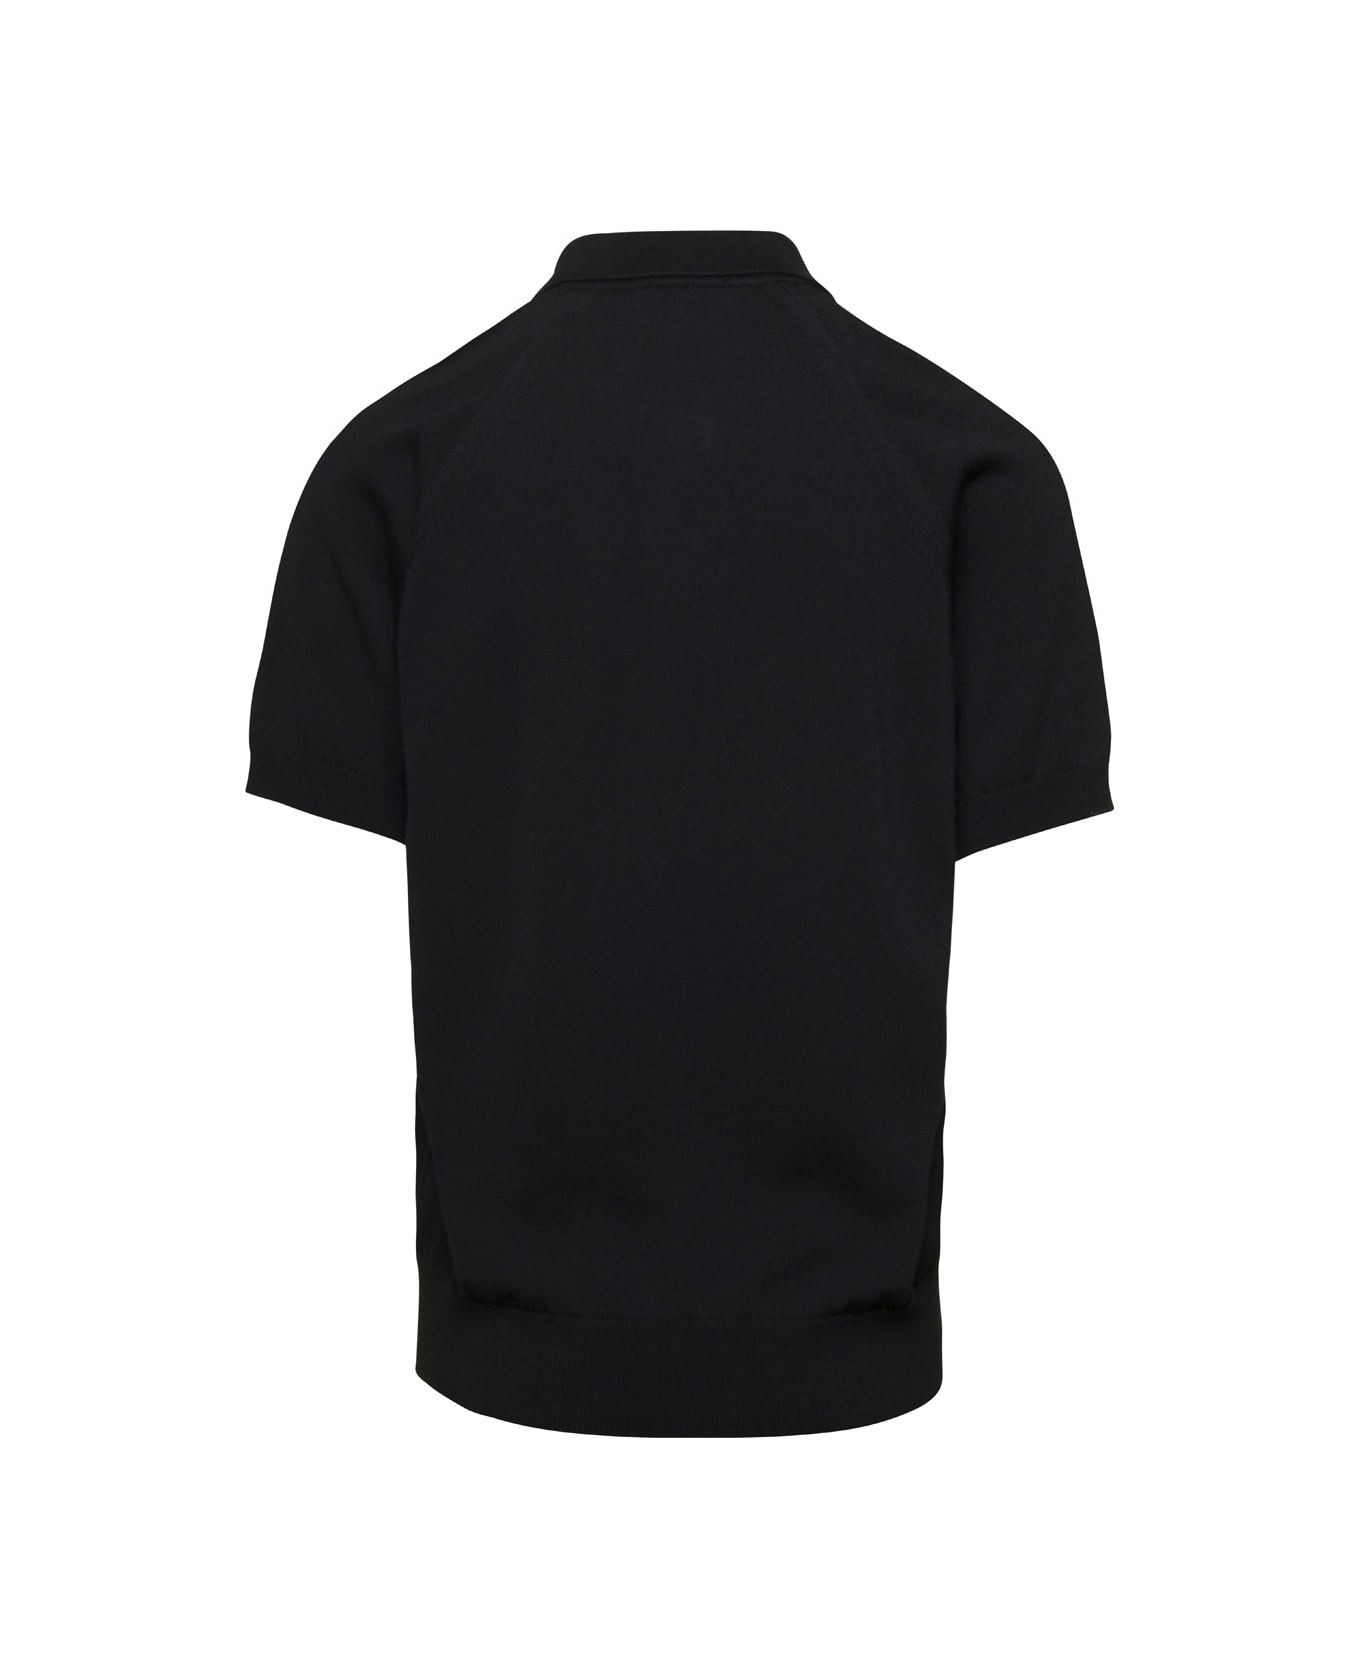 Lardini Black Polo T-shirt In Cotton Blend Man - Black ポロシャツ